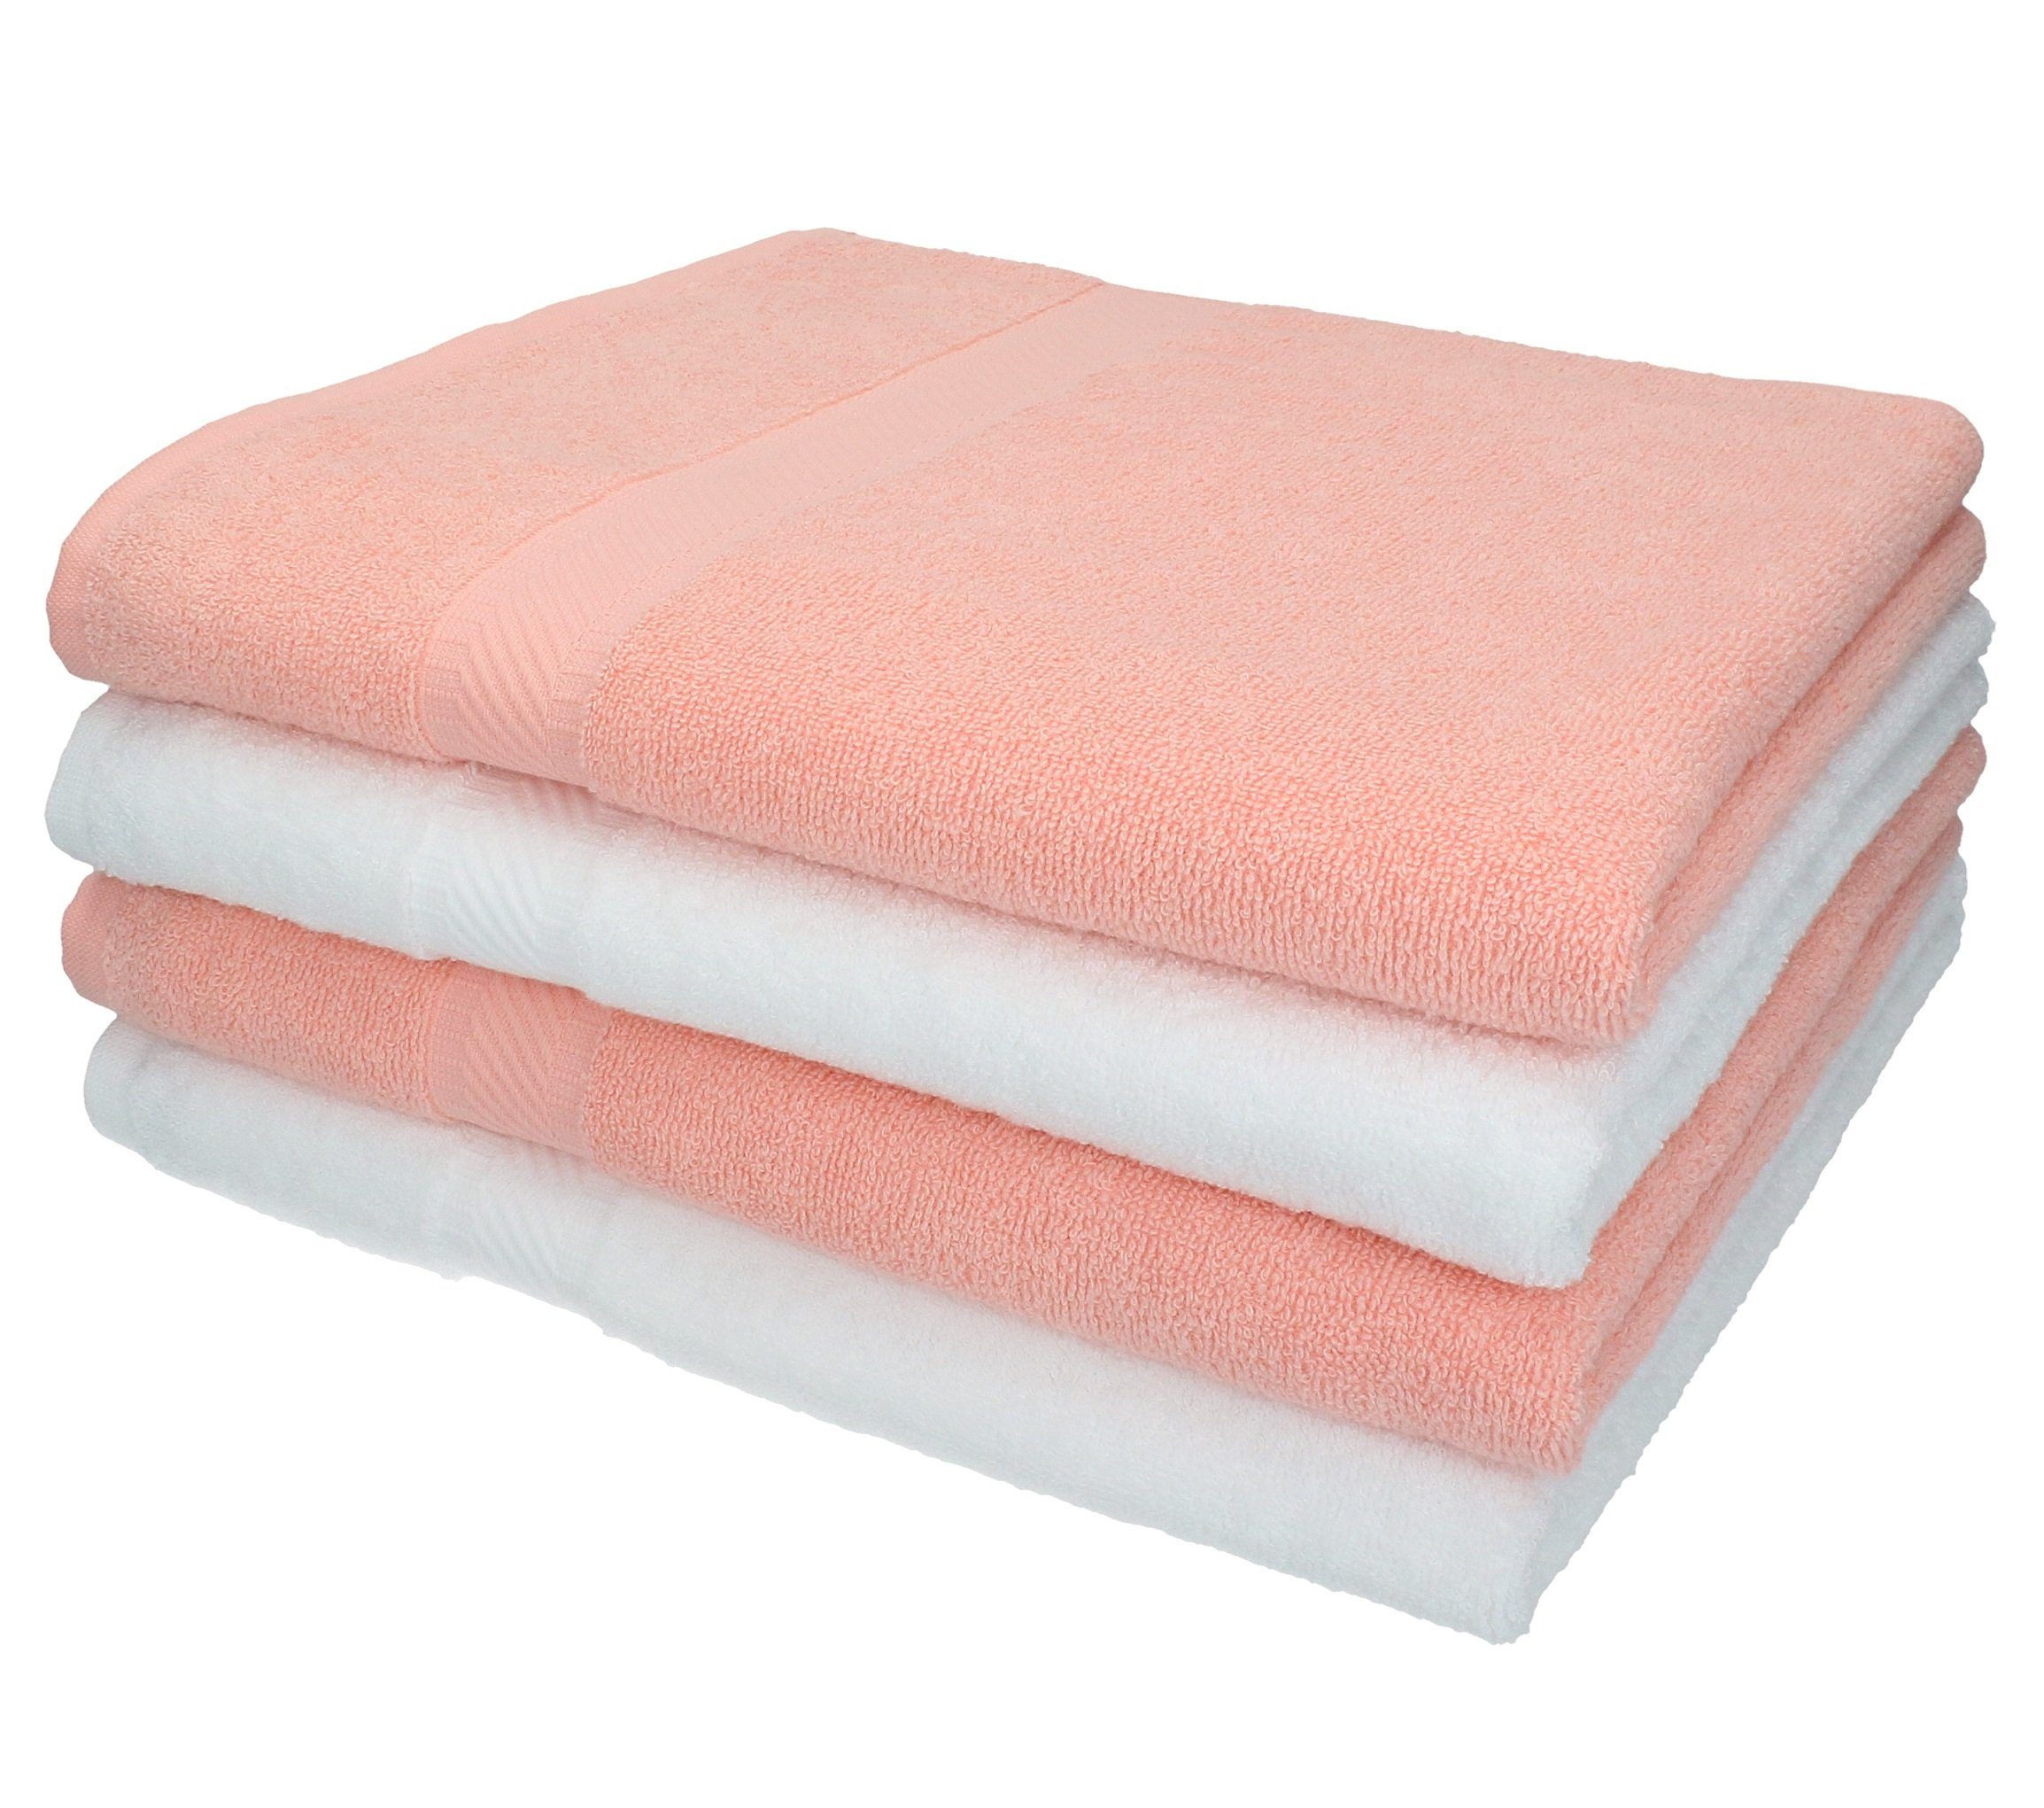 Betz Duschtücher 4 Stück Duschtücher Palermo 100% Baumwolle Duschtuch-Set Farbe weiß und apricot, 100% Baumwolle